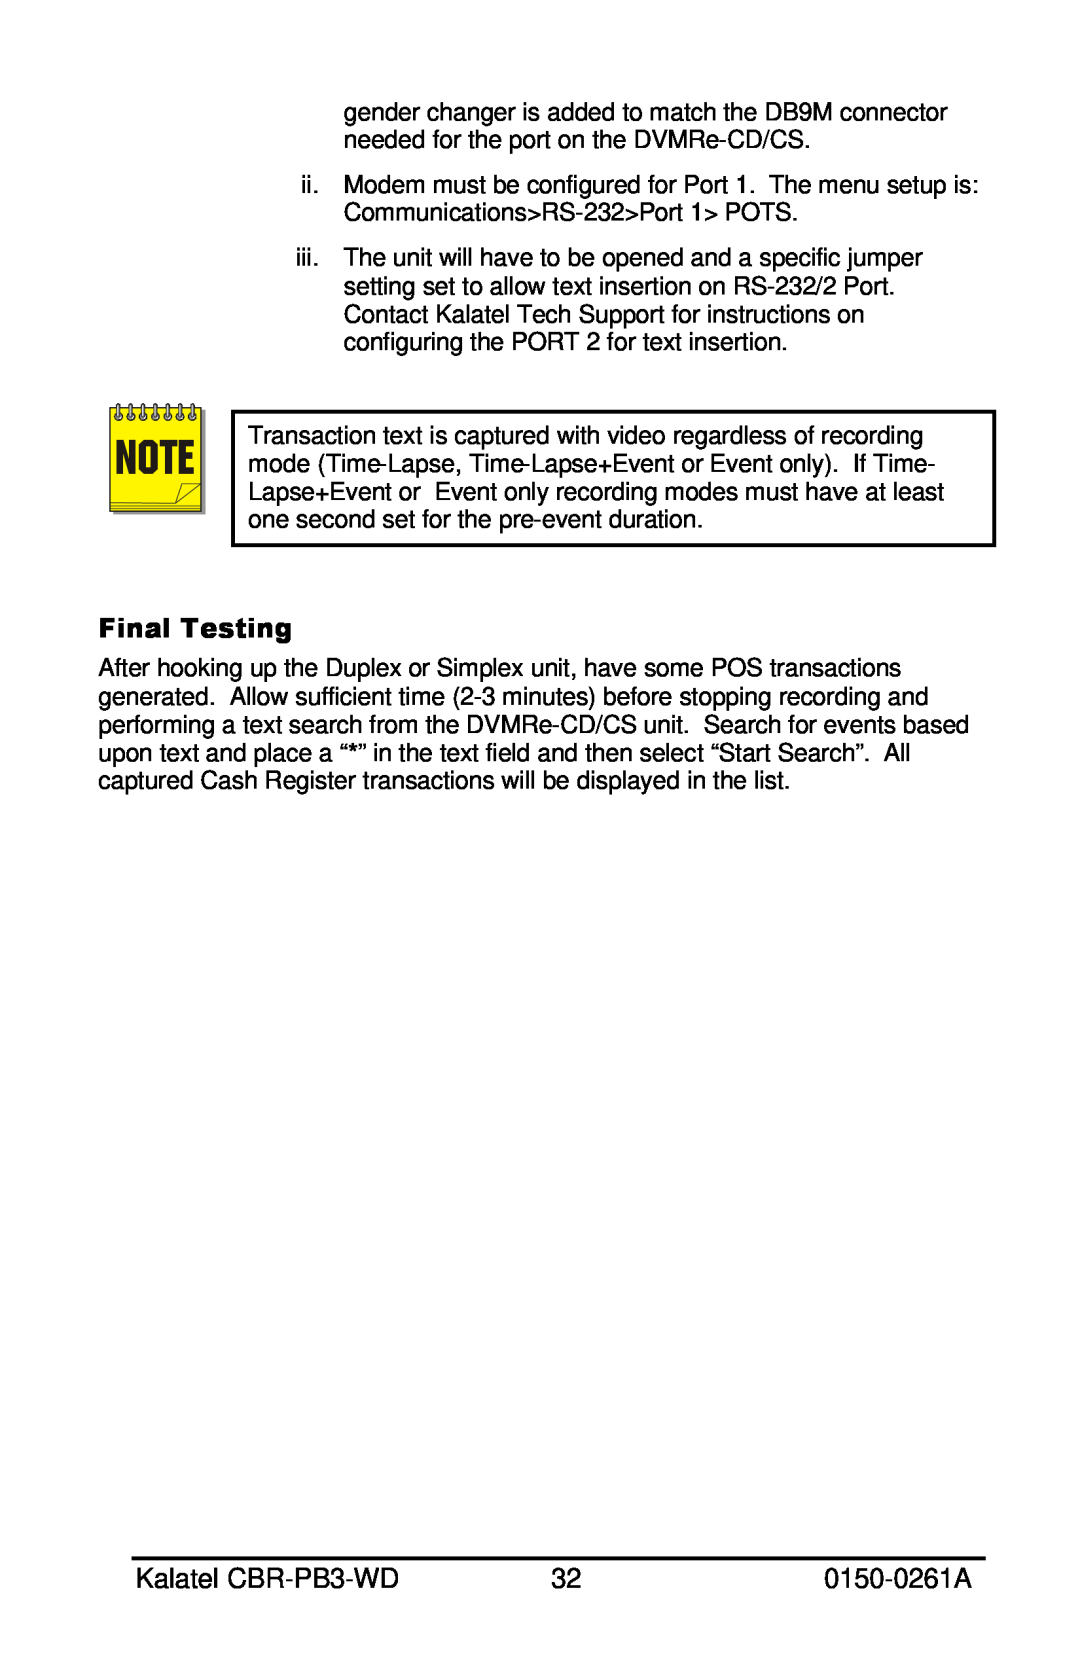 GE CBR-PB3-WD installation manual Final Testing 